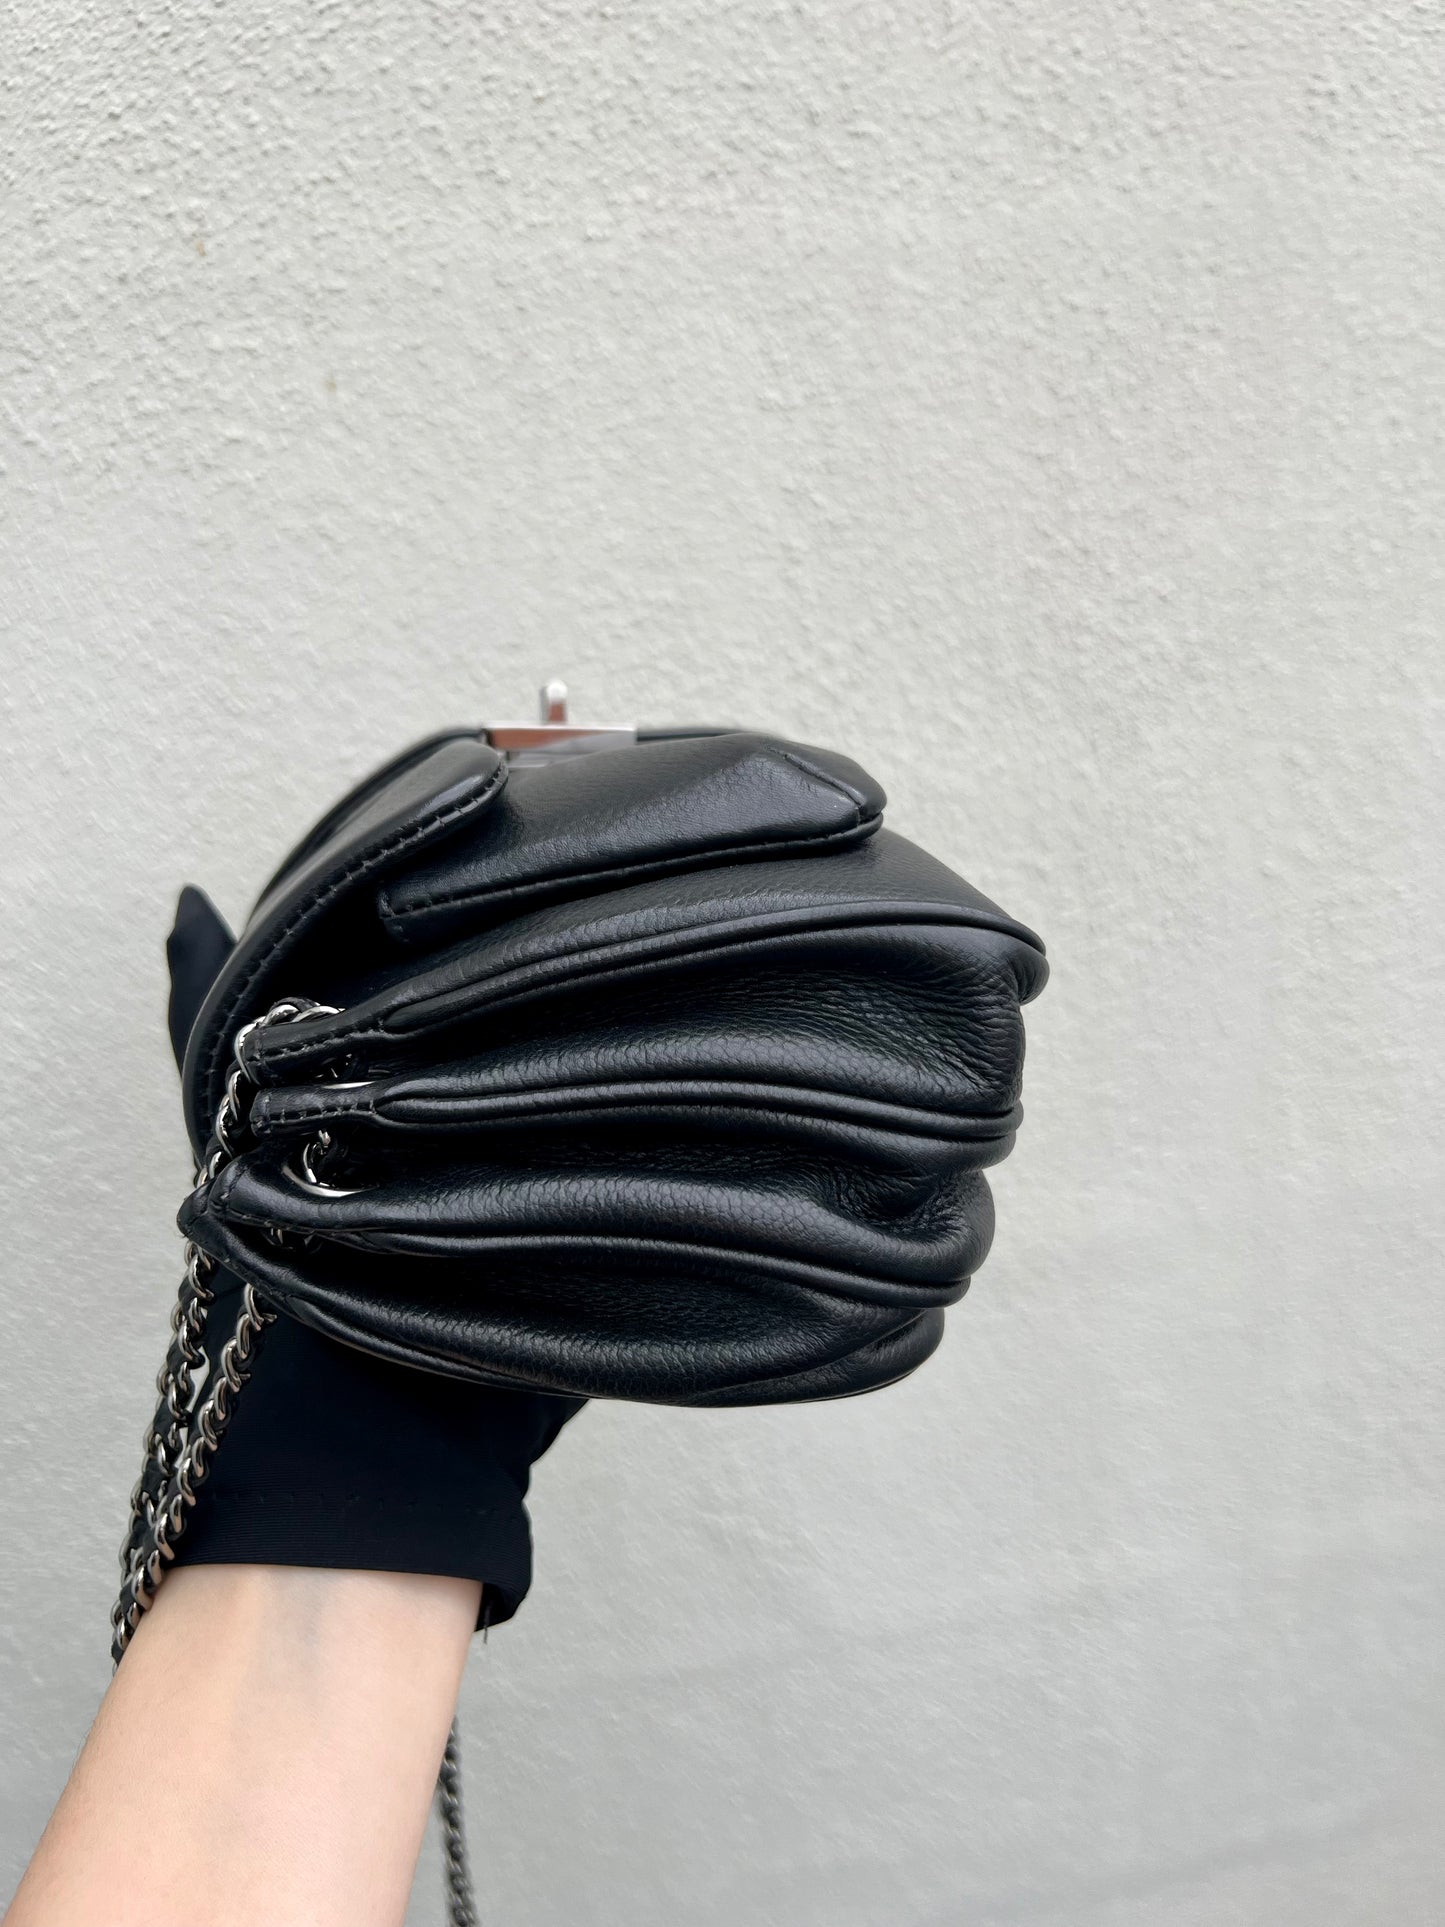 Pre-loved Chanel 2.55 Black Caviar Leather Shoulder & Crossbody Bag